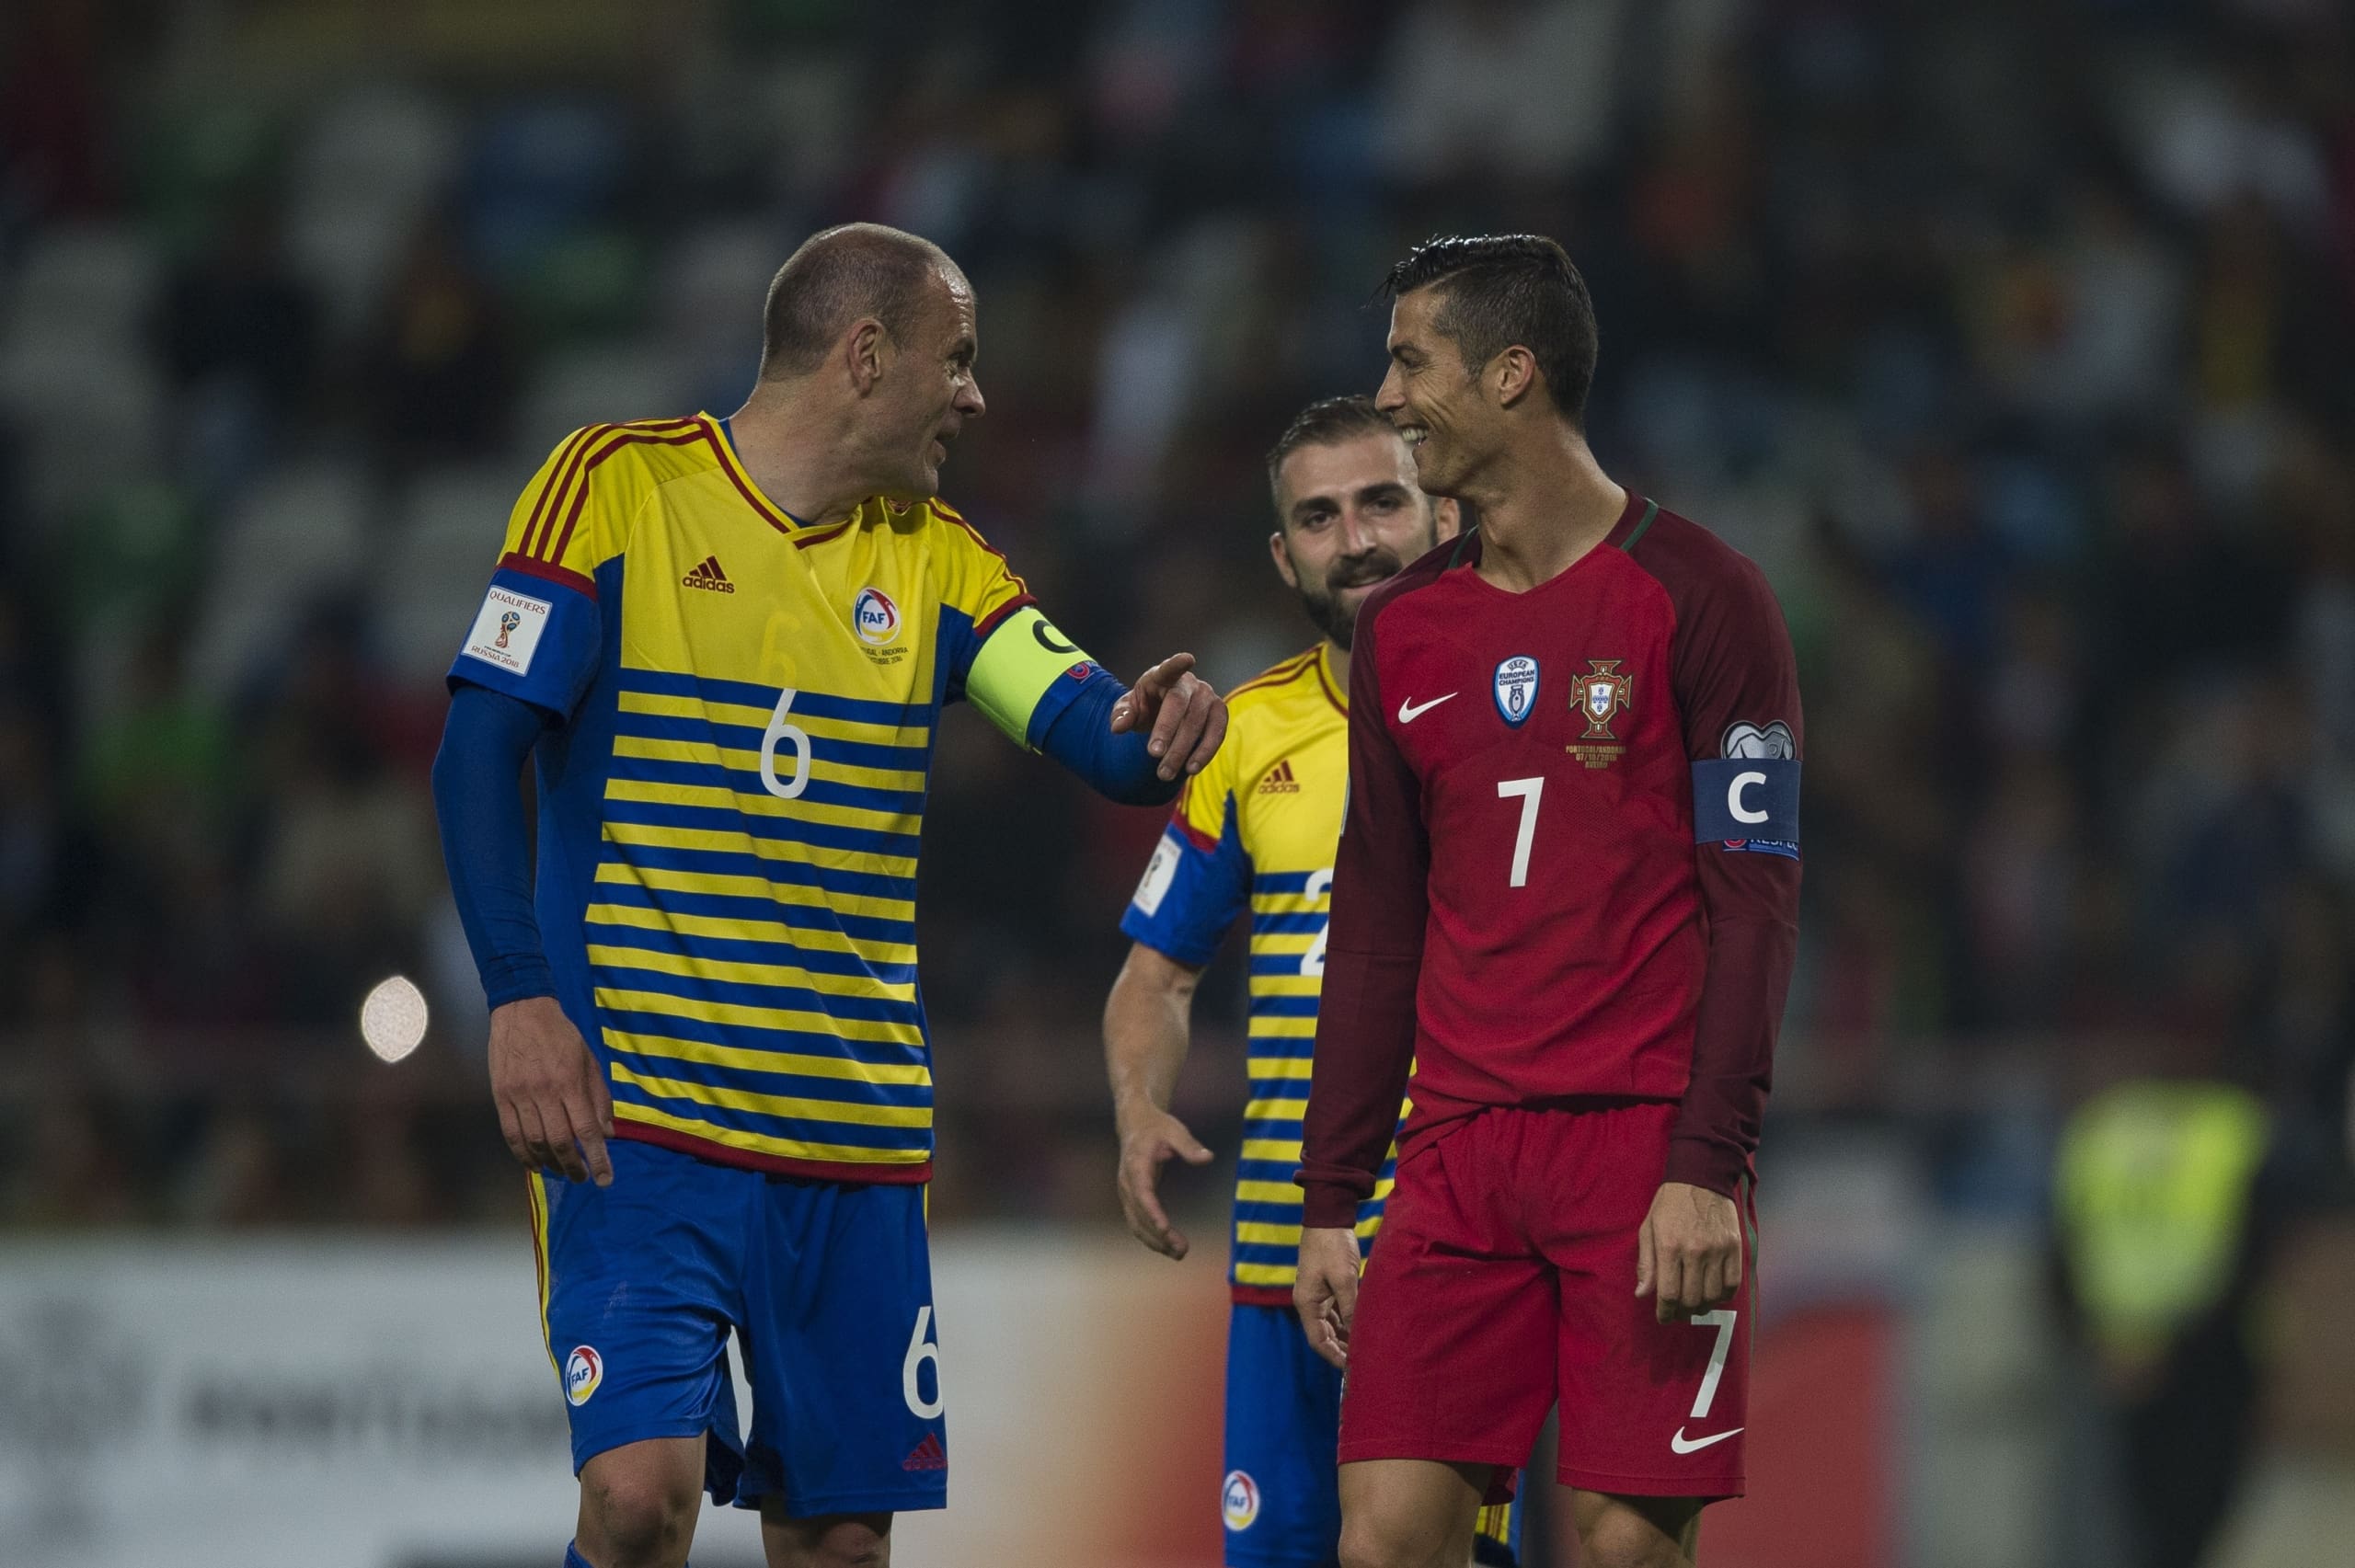 Ildefons Lima Cristiano Ronaldo Portugal Andorra